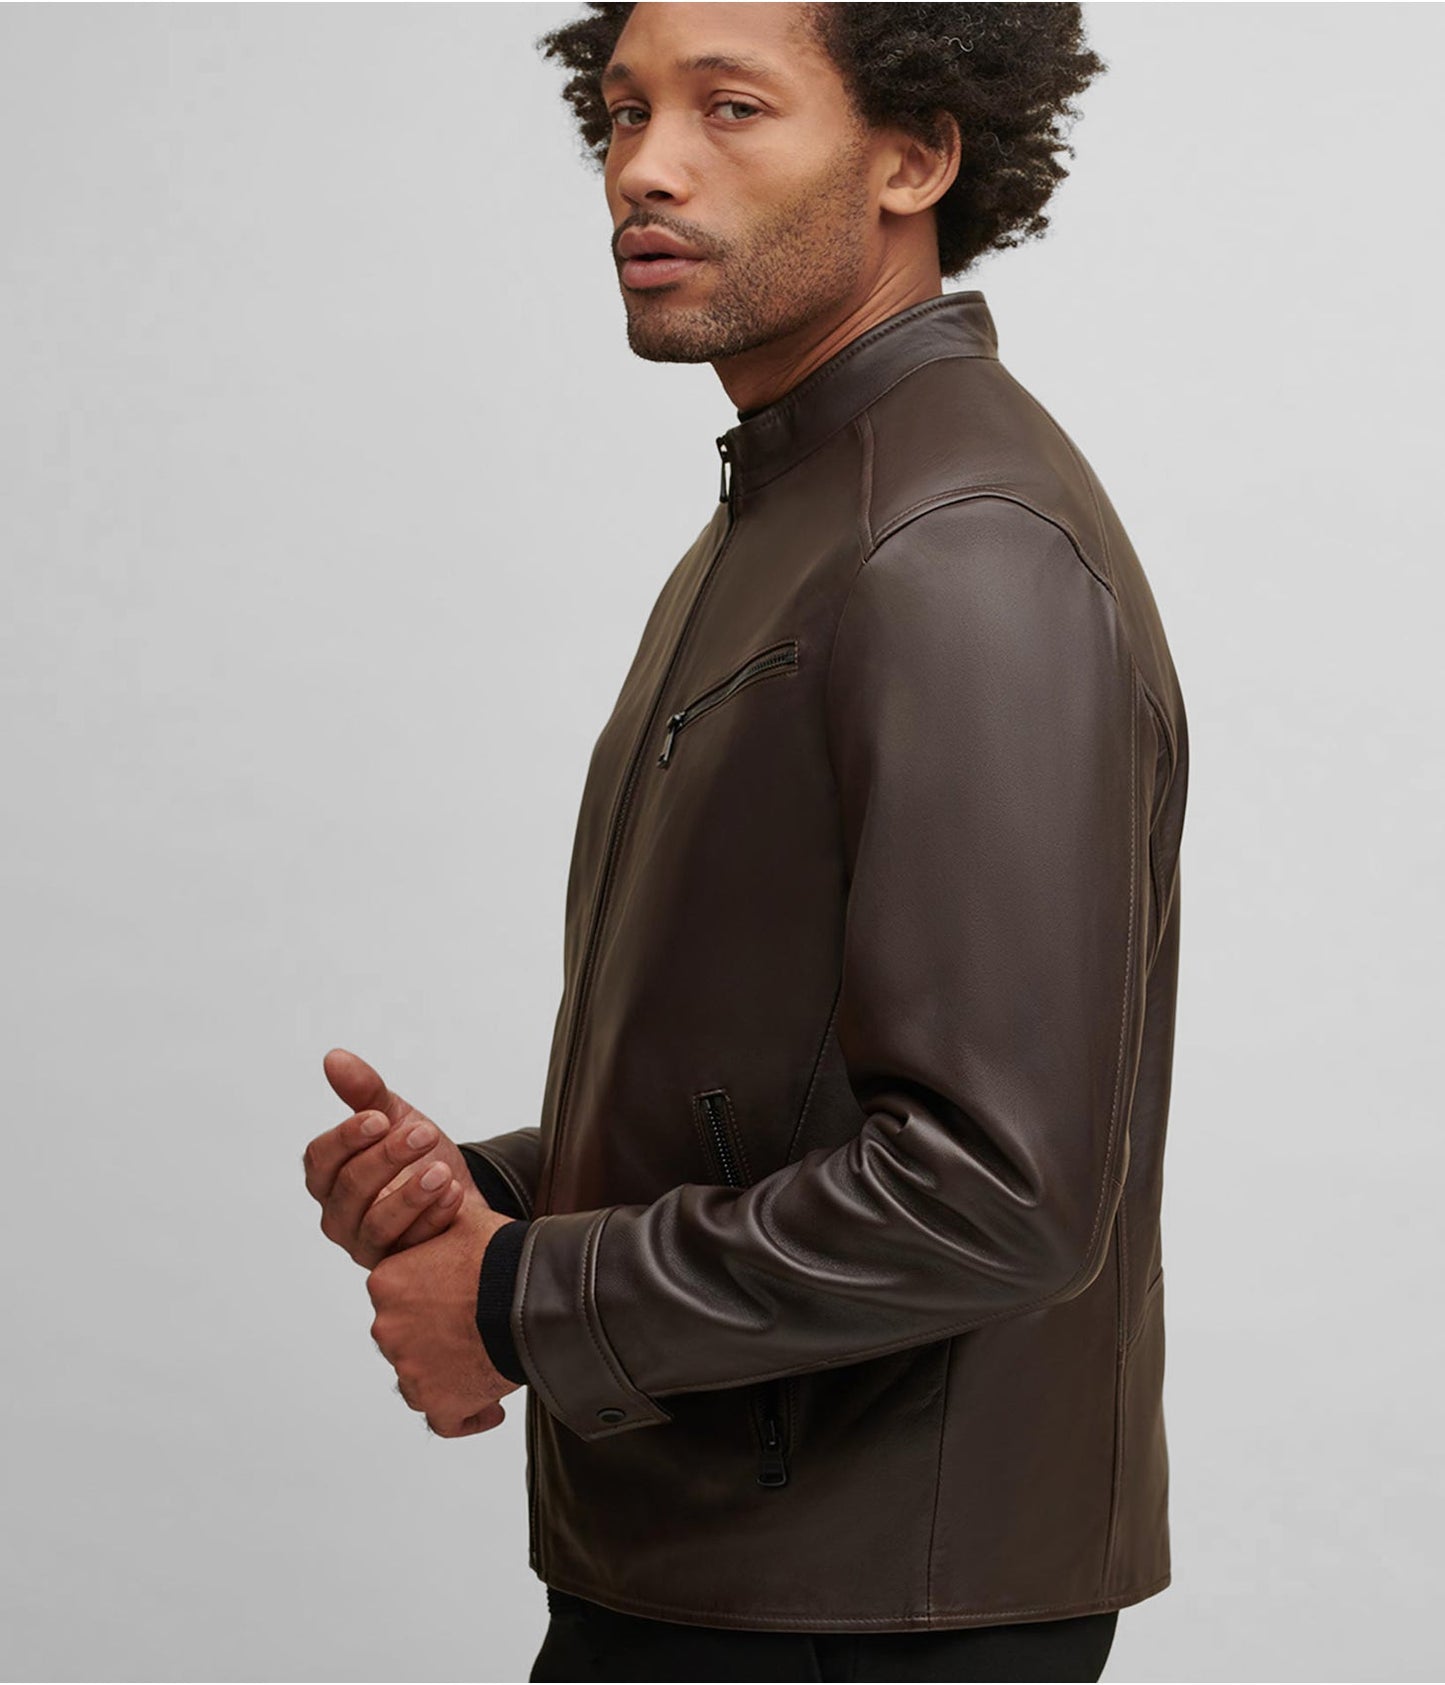 Men's Dark Brown Leather Jacket